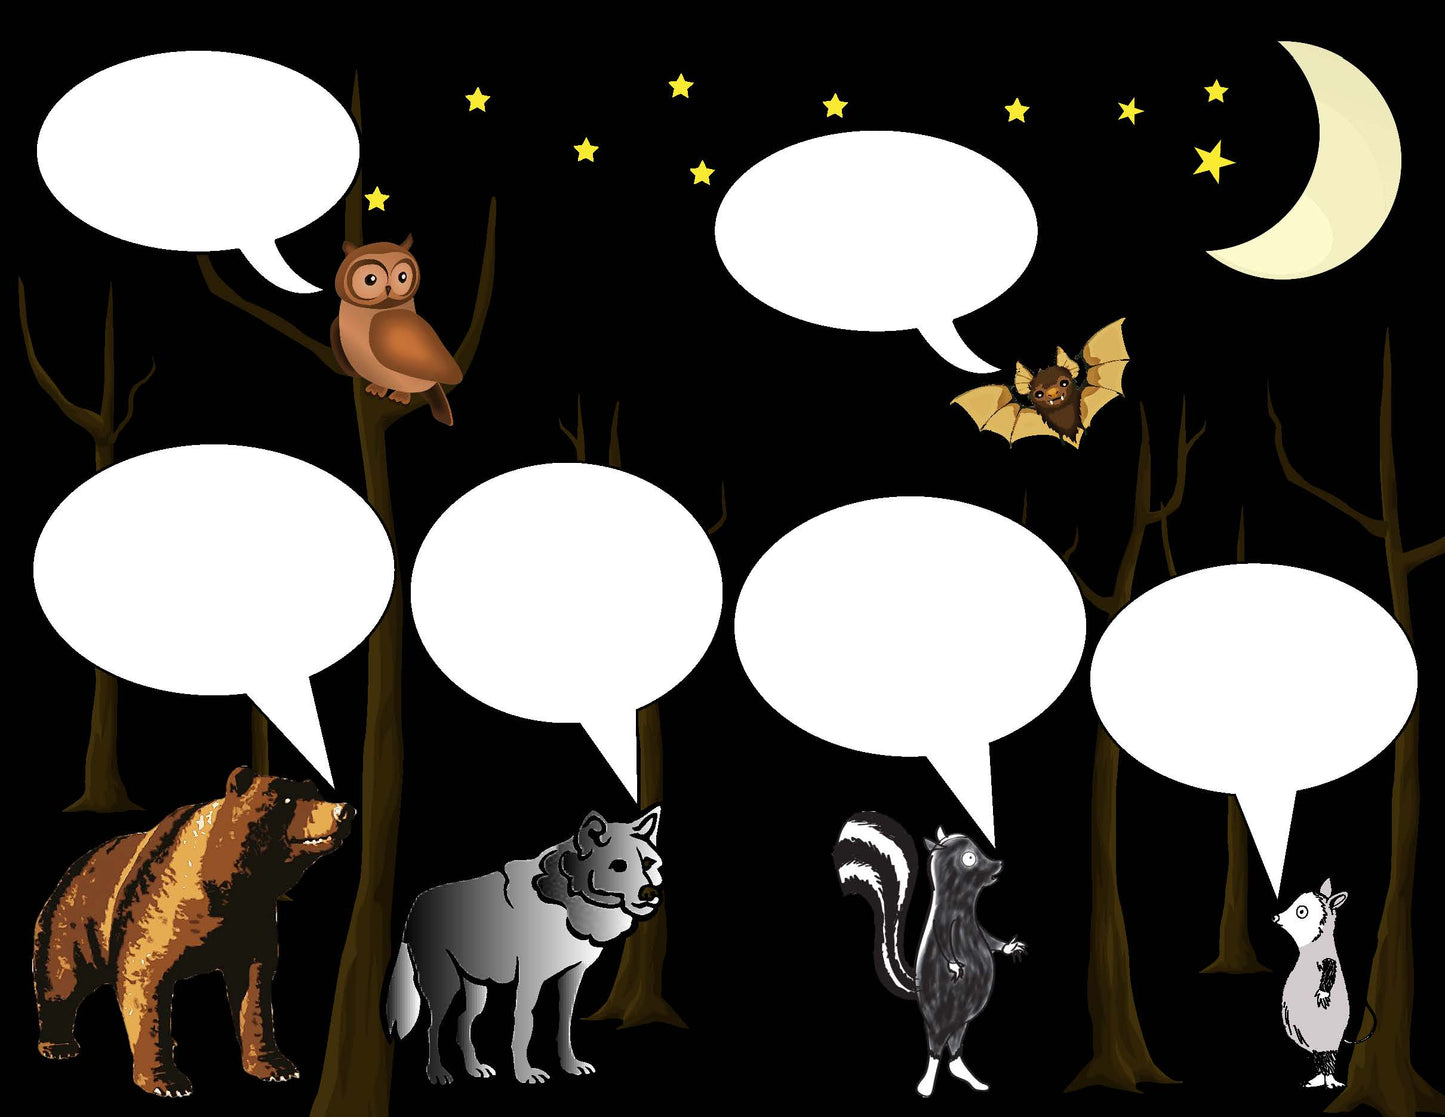 Speech bubble literacy activity to go with Night Animals